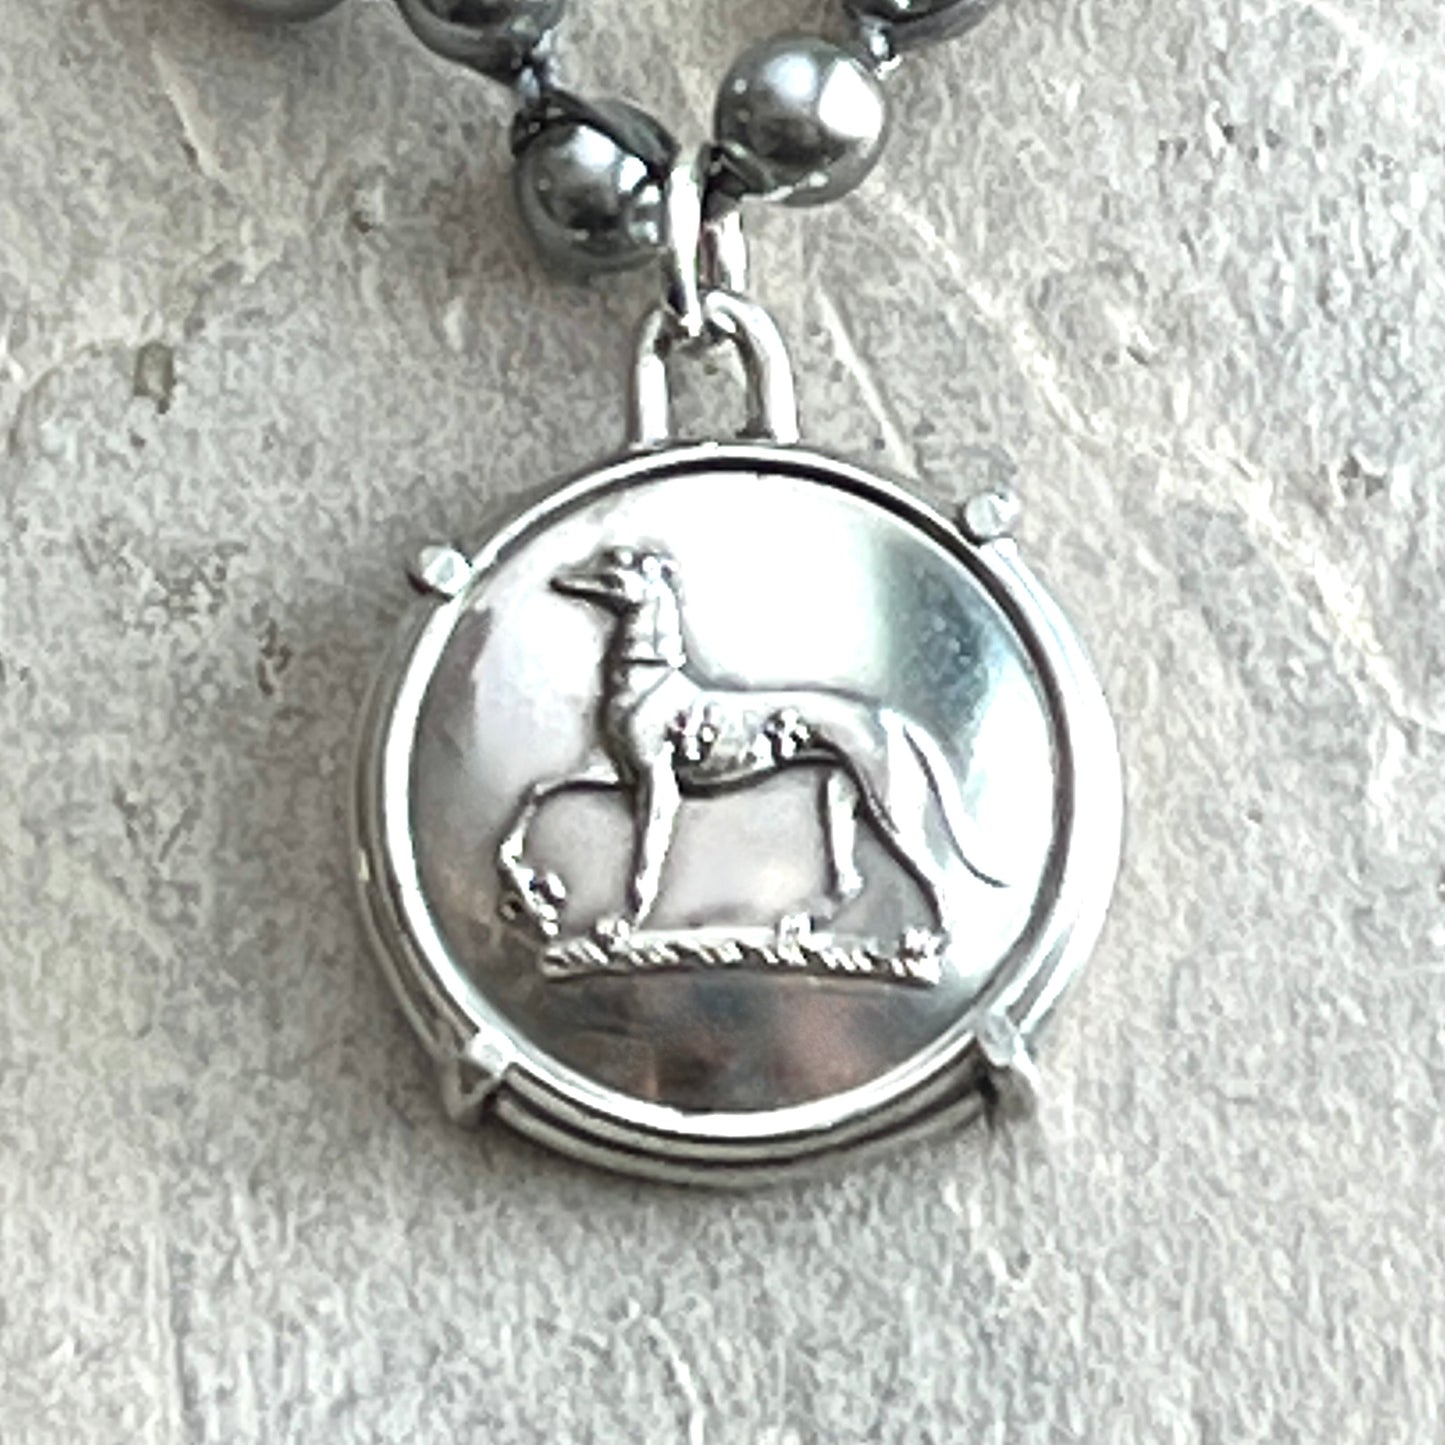 Greyhound Livery Button Necklace